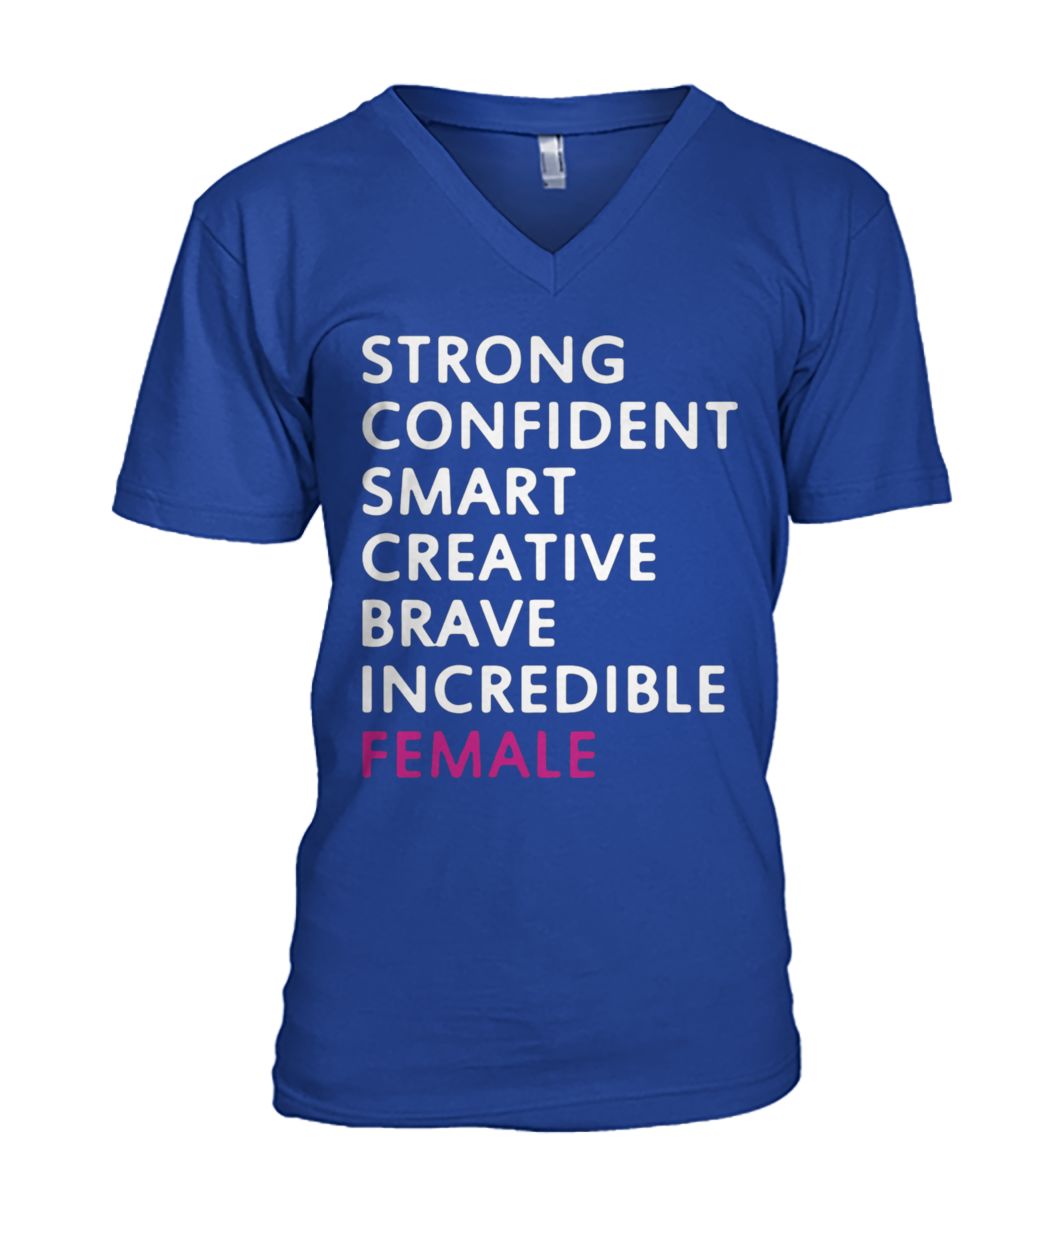 Strong confident smart creative brave incredible female mens v-neck